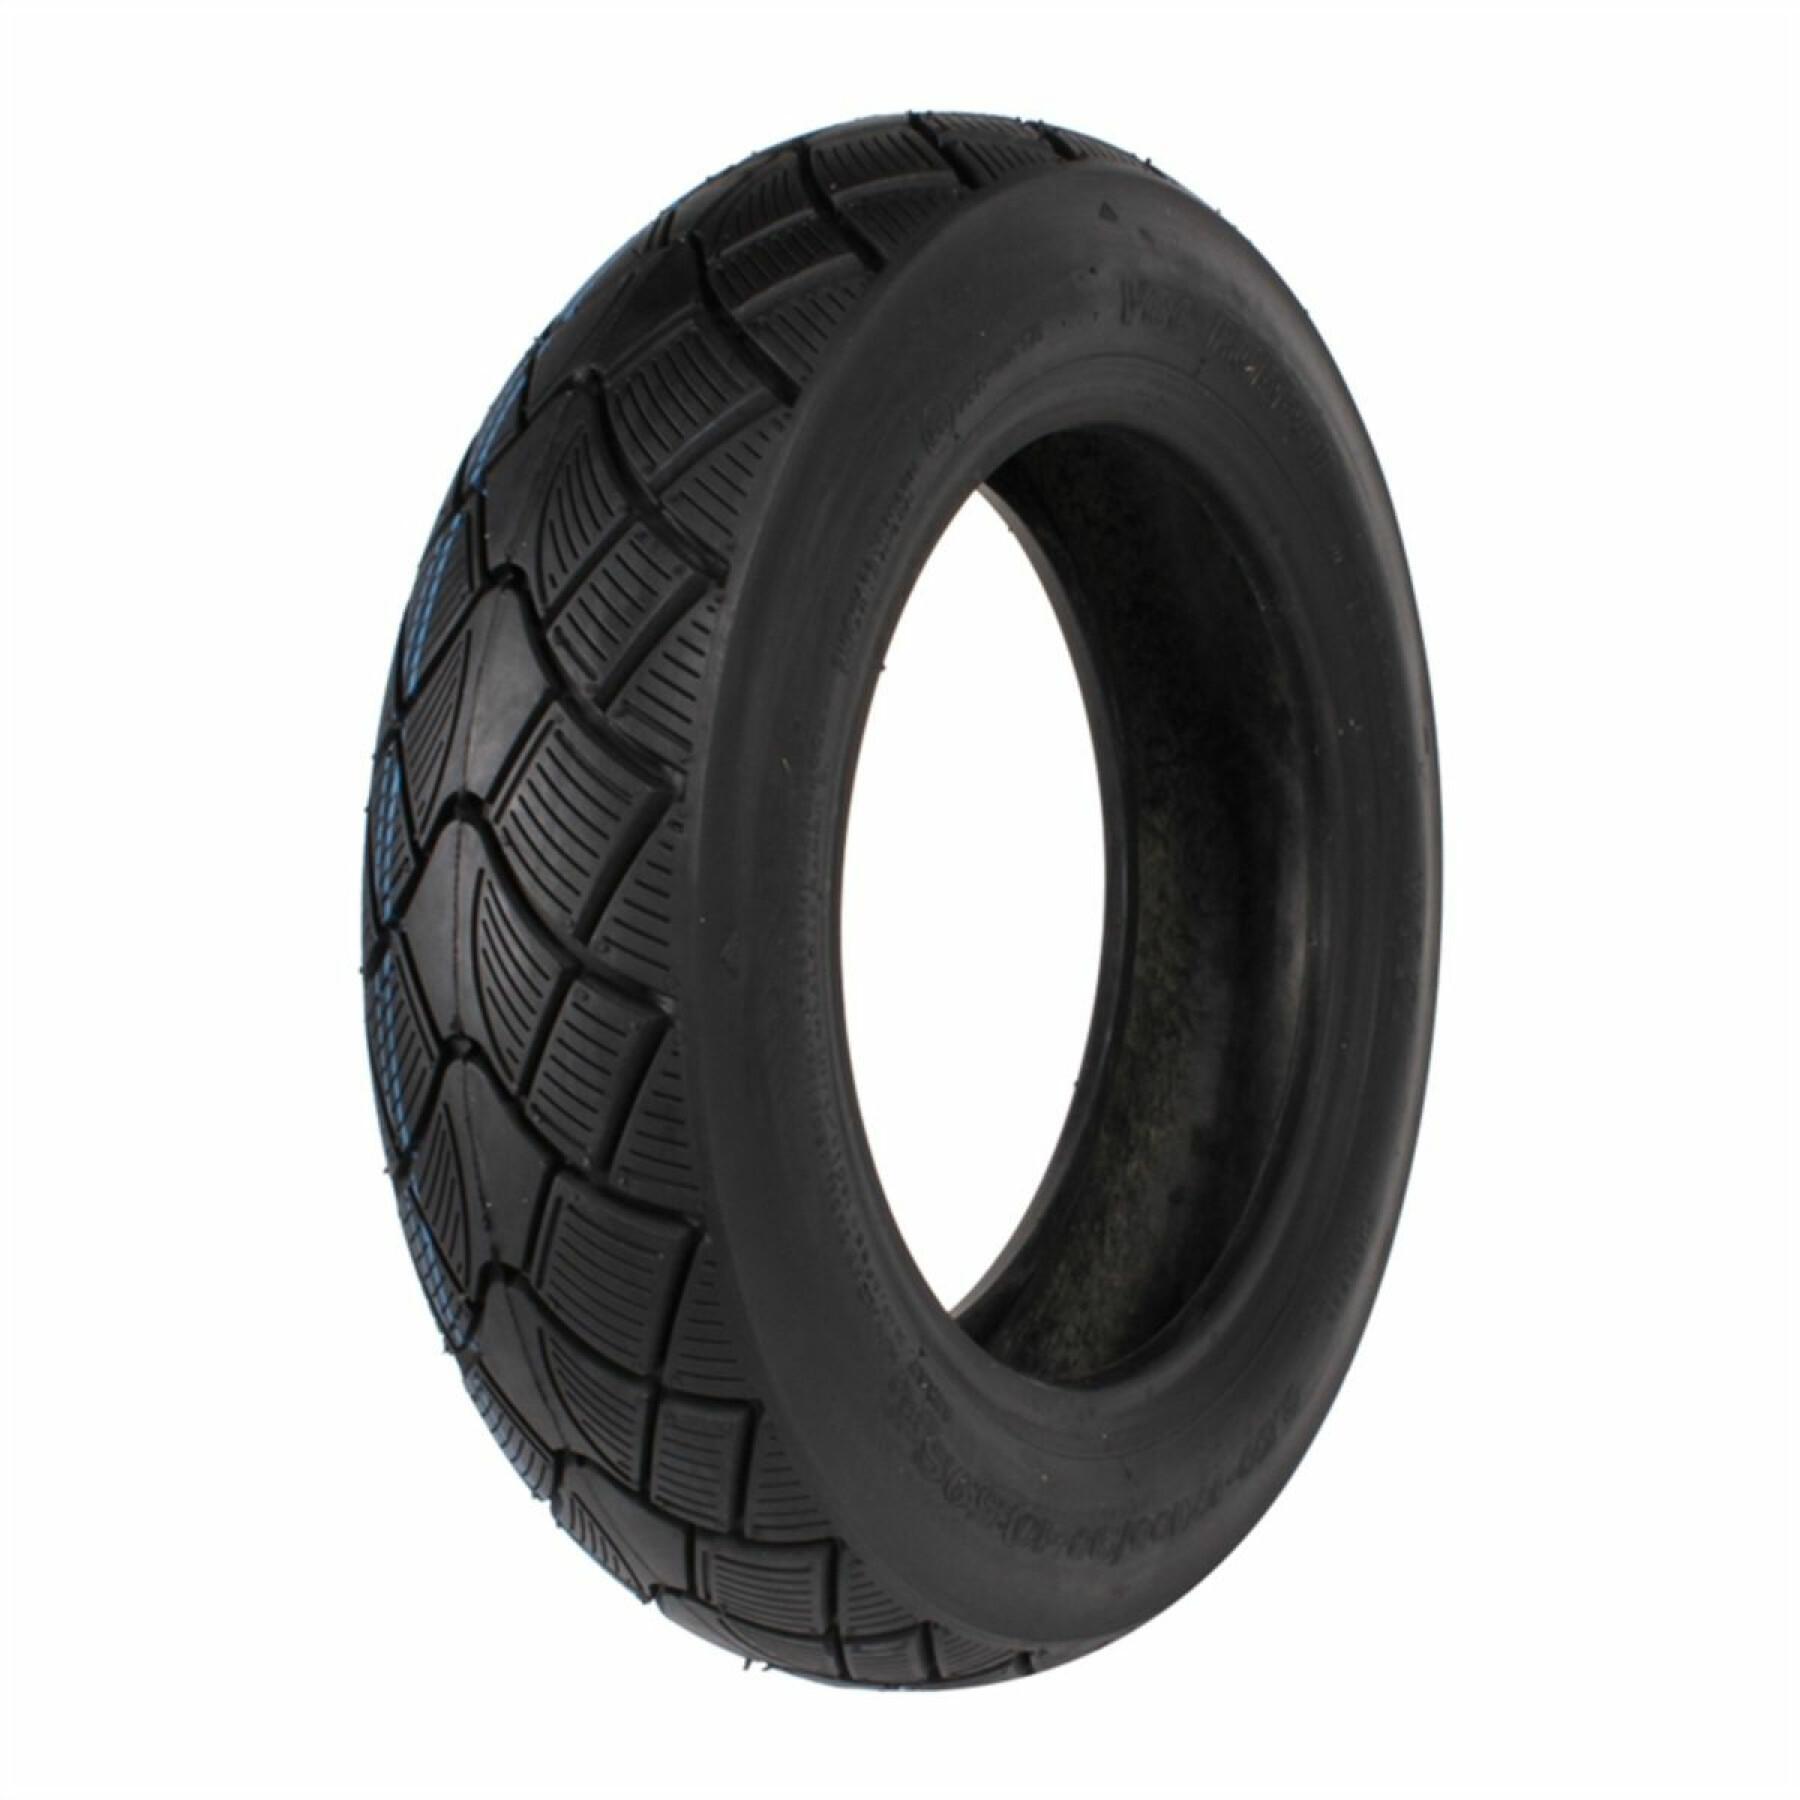 Neumáticos Vee Rubber 140/60-13 VRM 351 TBL (3)